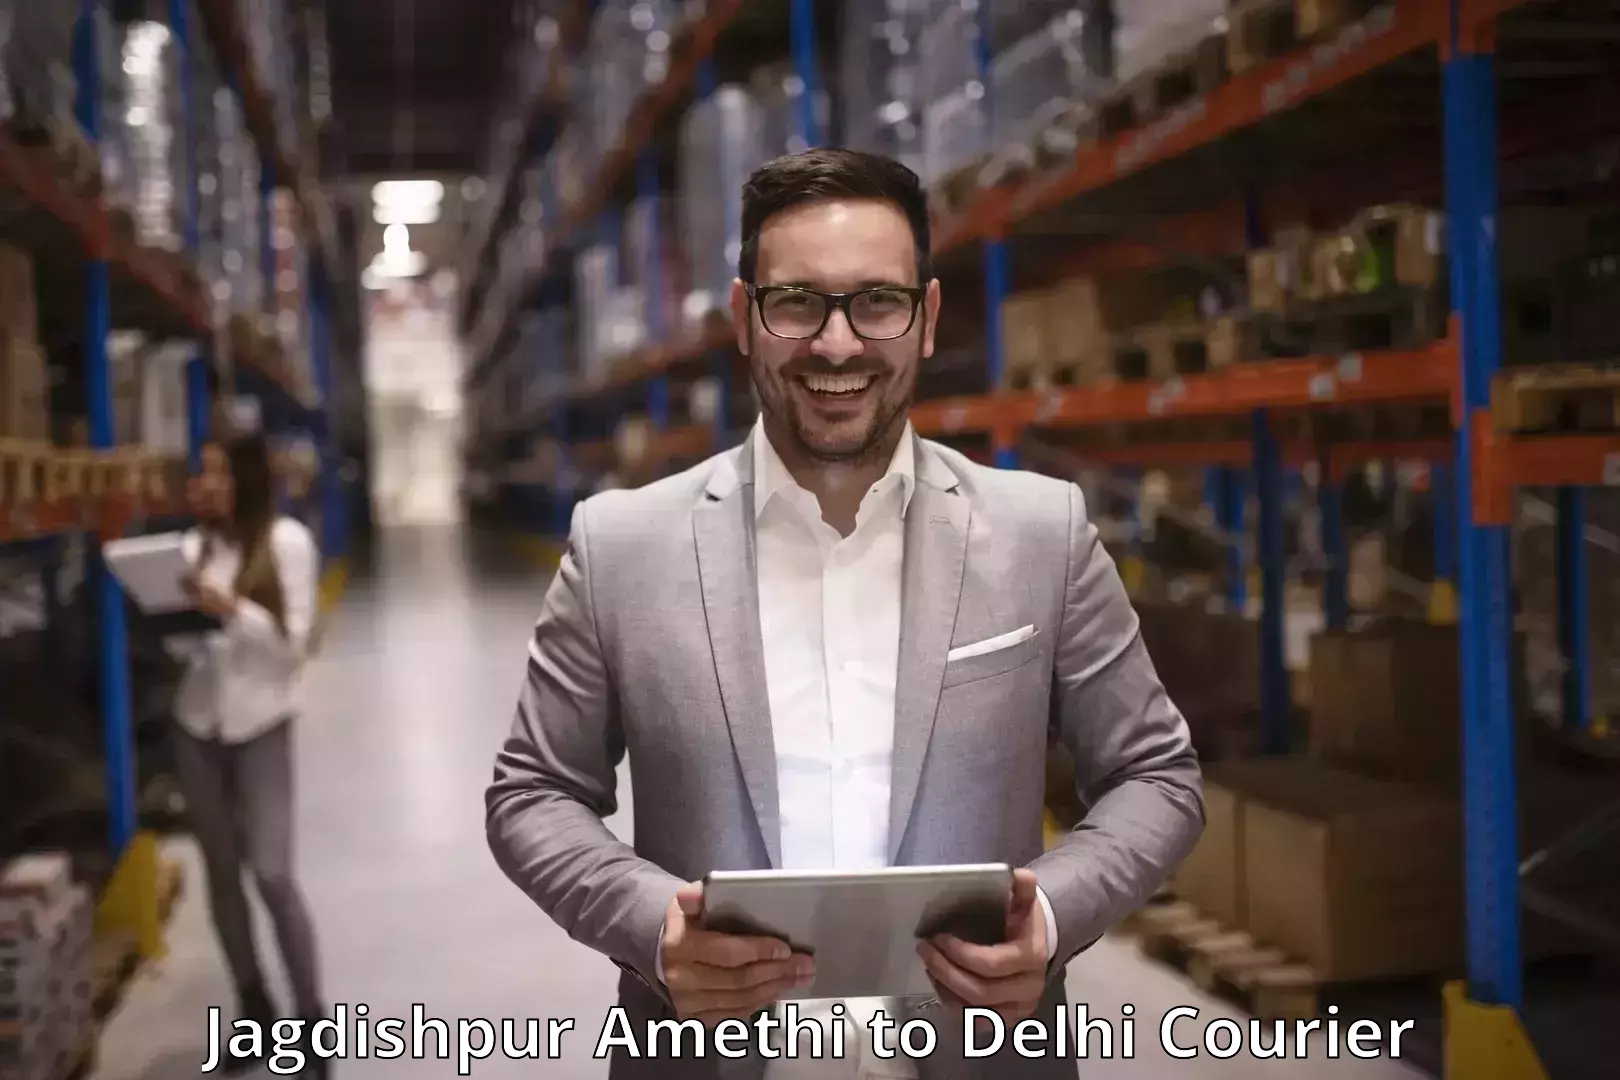 Business delivery service Jagdishpur Amethi to University of Delhi